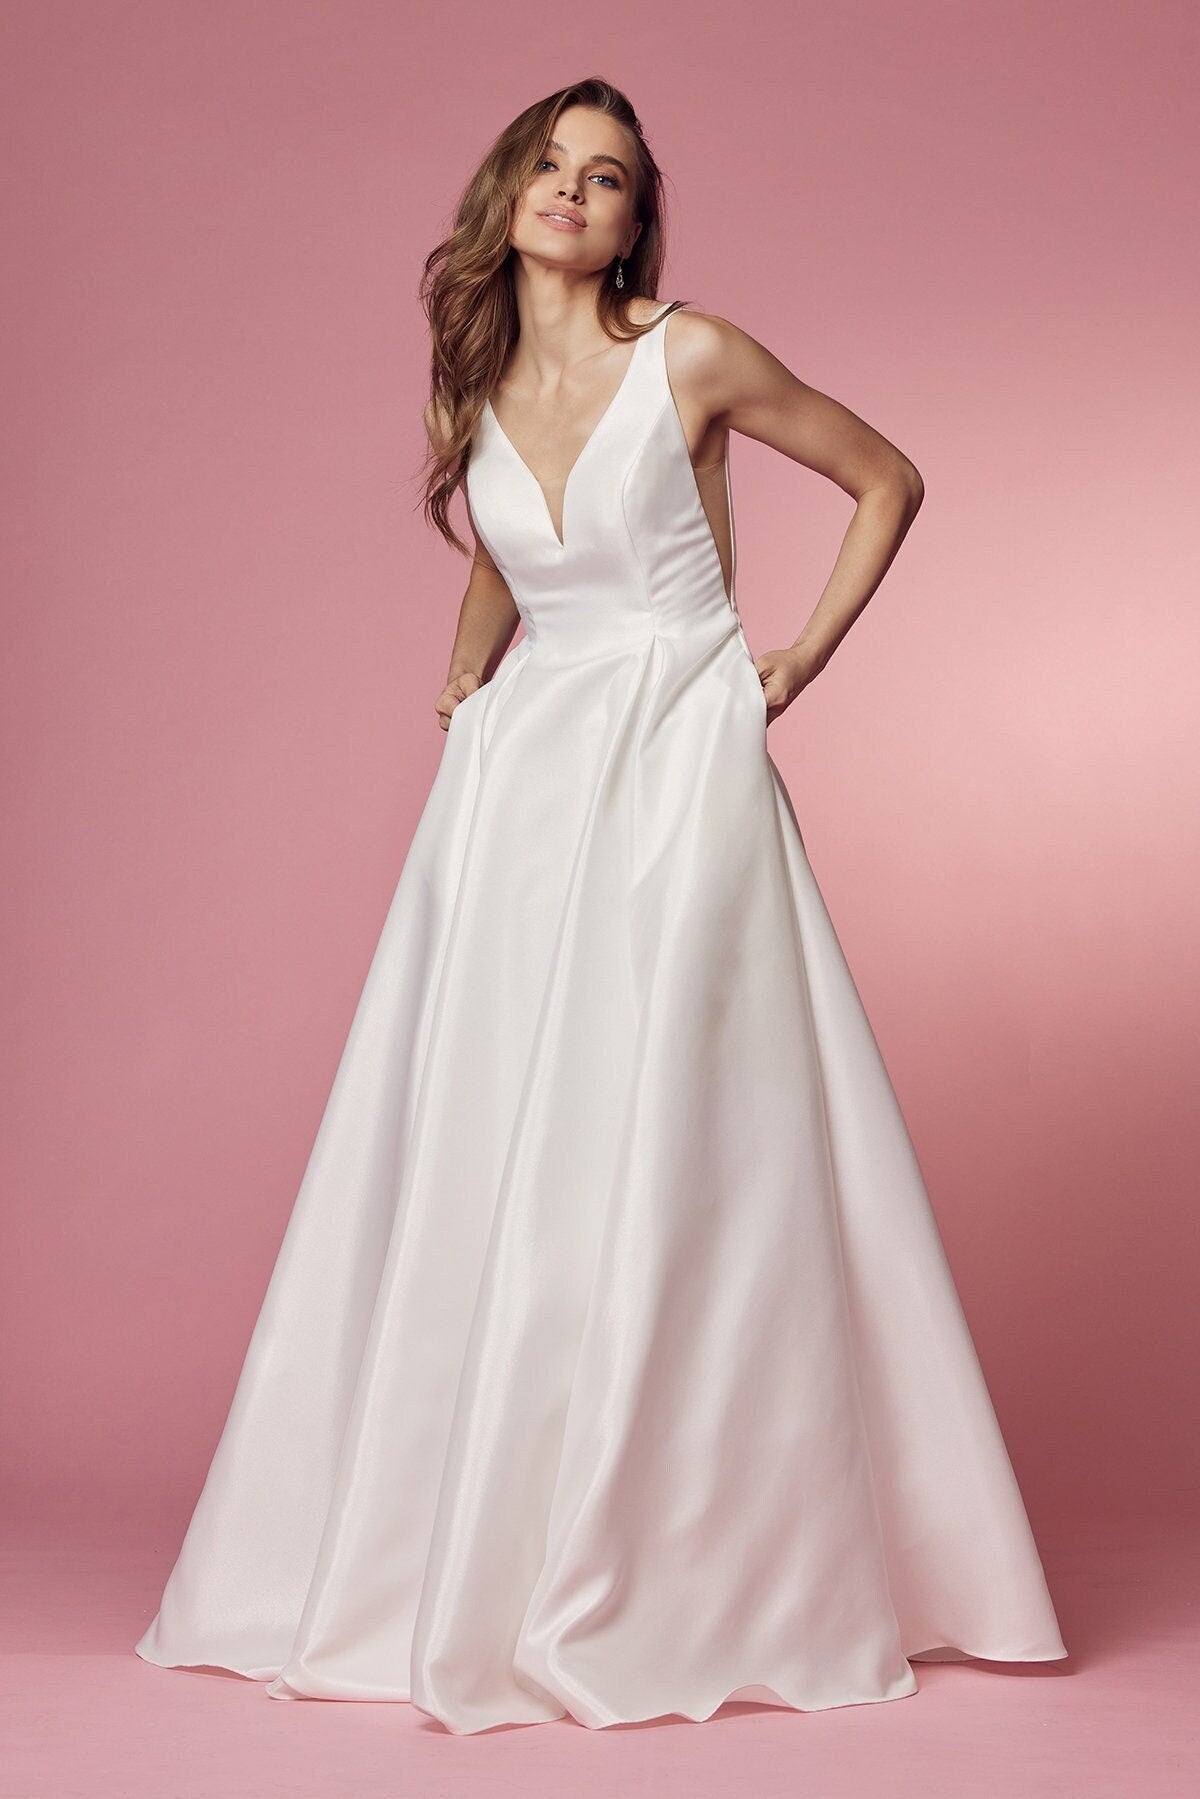 Minimalist Simple Sleeveless Long Full Aline Wedding Dress V Neck Bridal Gown Sexy Open Sides Floor Length Pockets Open Back